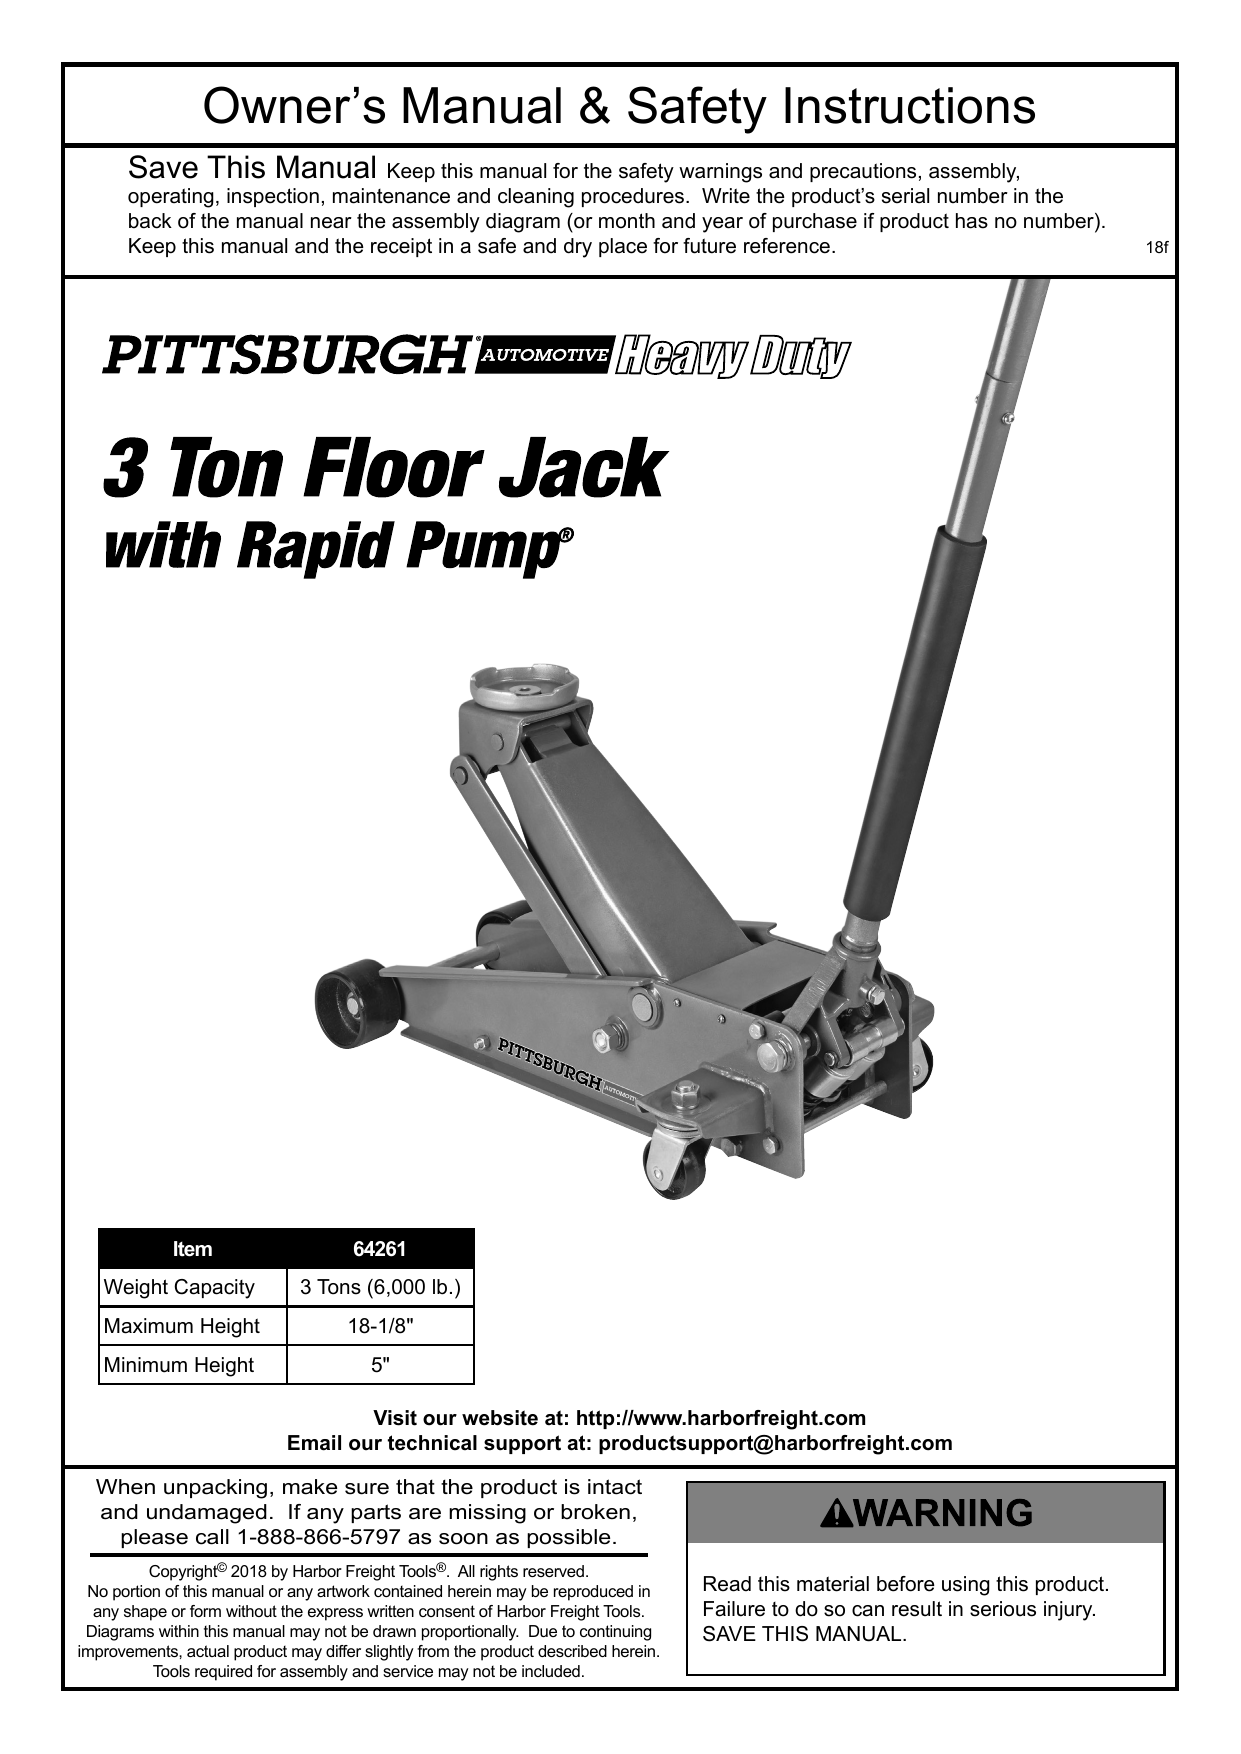 Pittsburgh Automotive 64261 3 Ton Heavy Duty Rapid Pump® Floor Jack Owner's  Manual | Manualzz